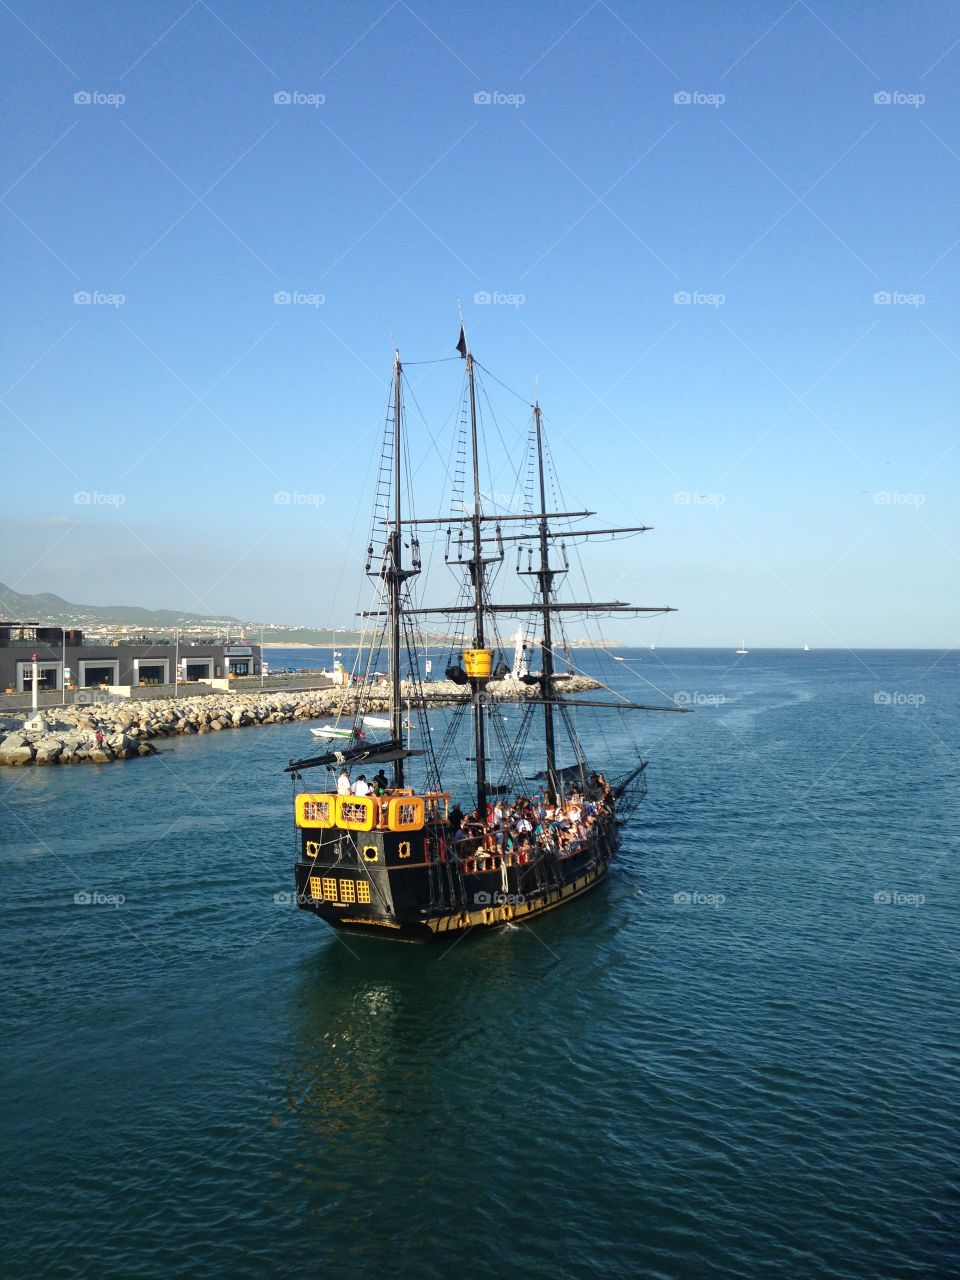 Pirate ship in Cabo